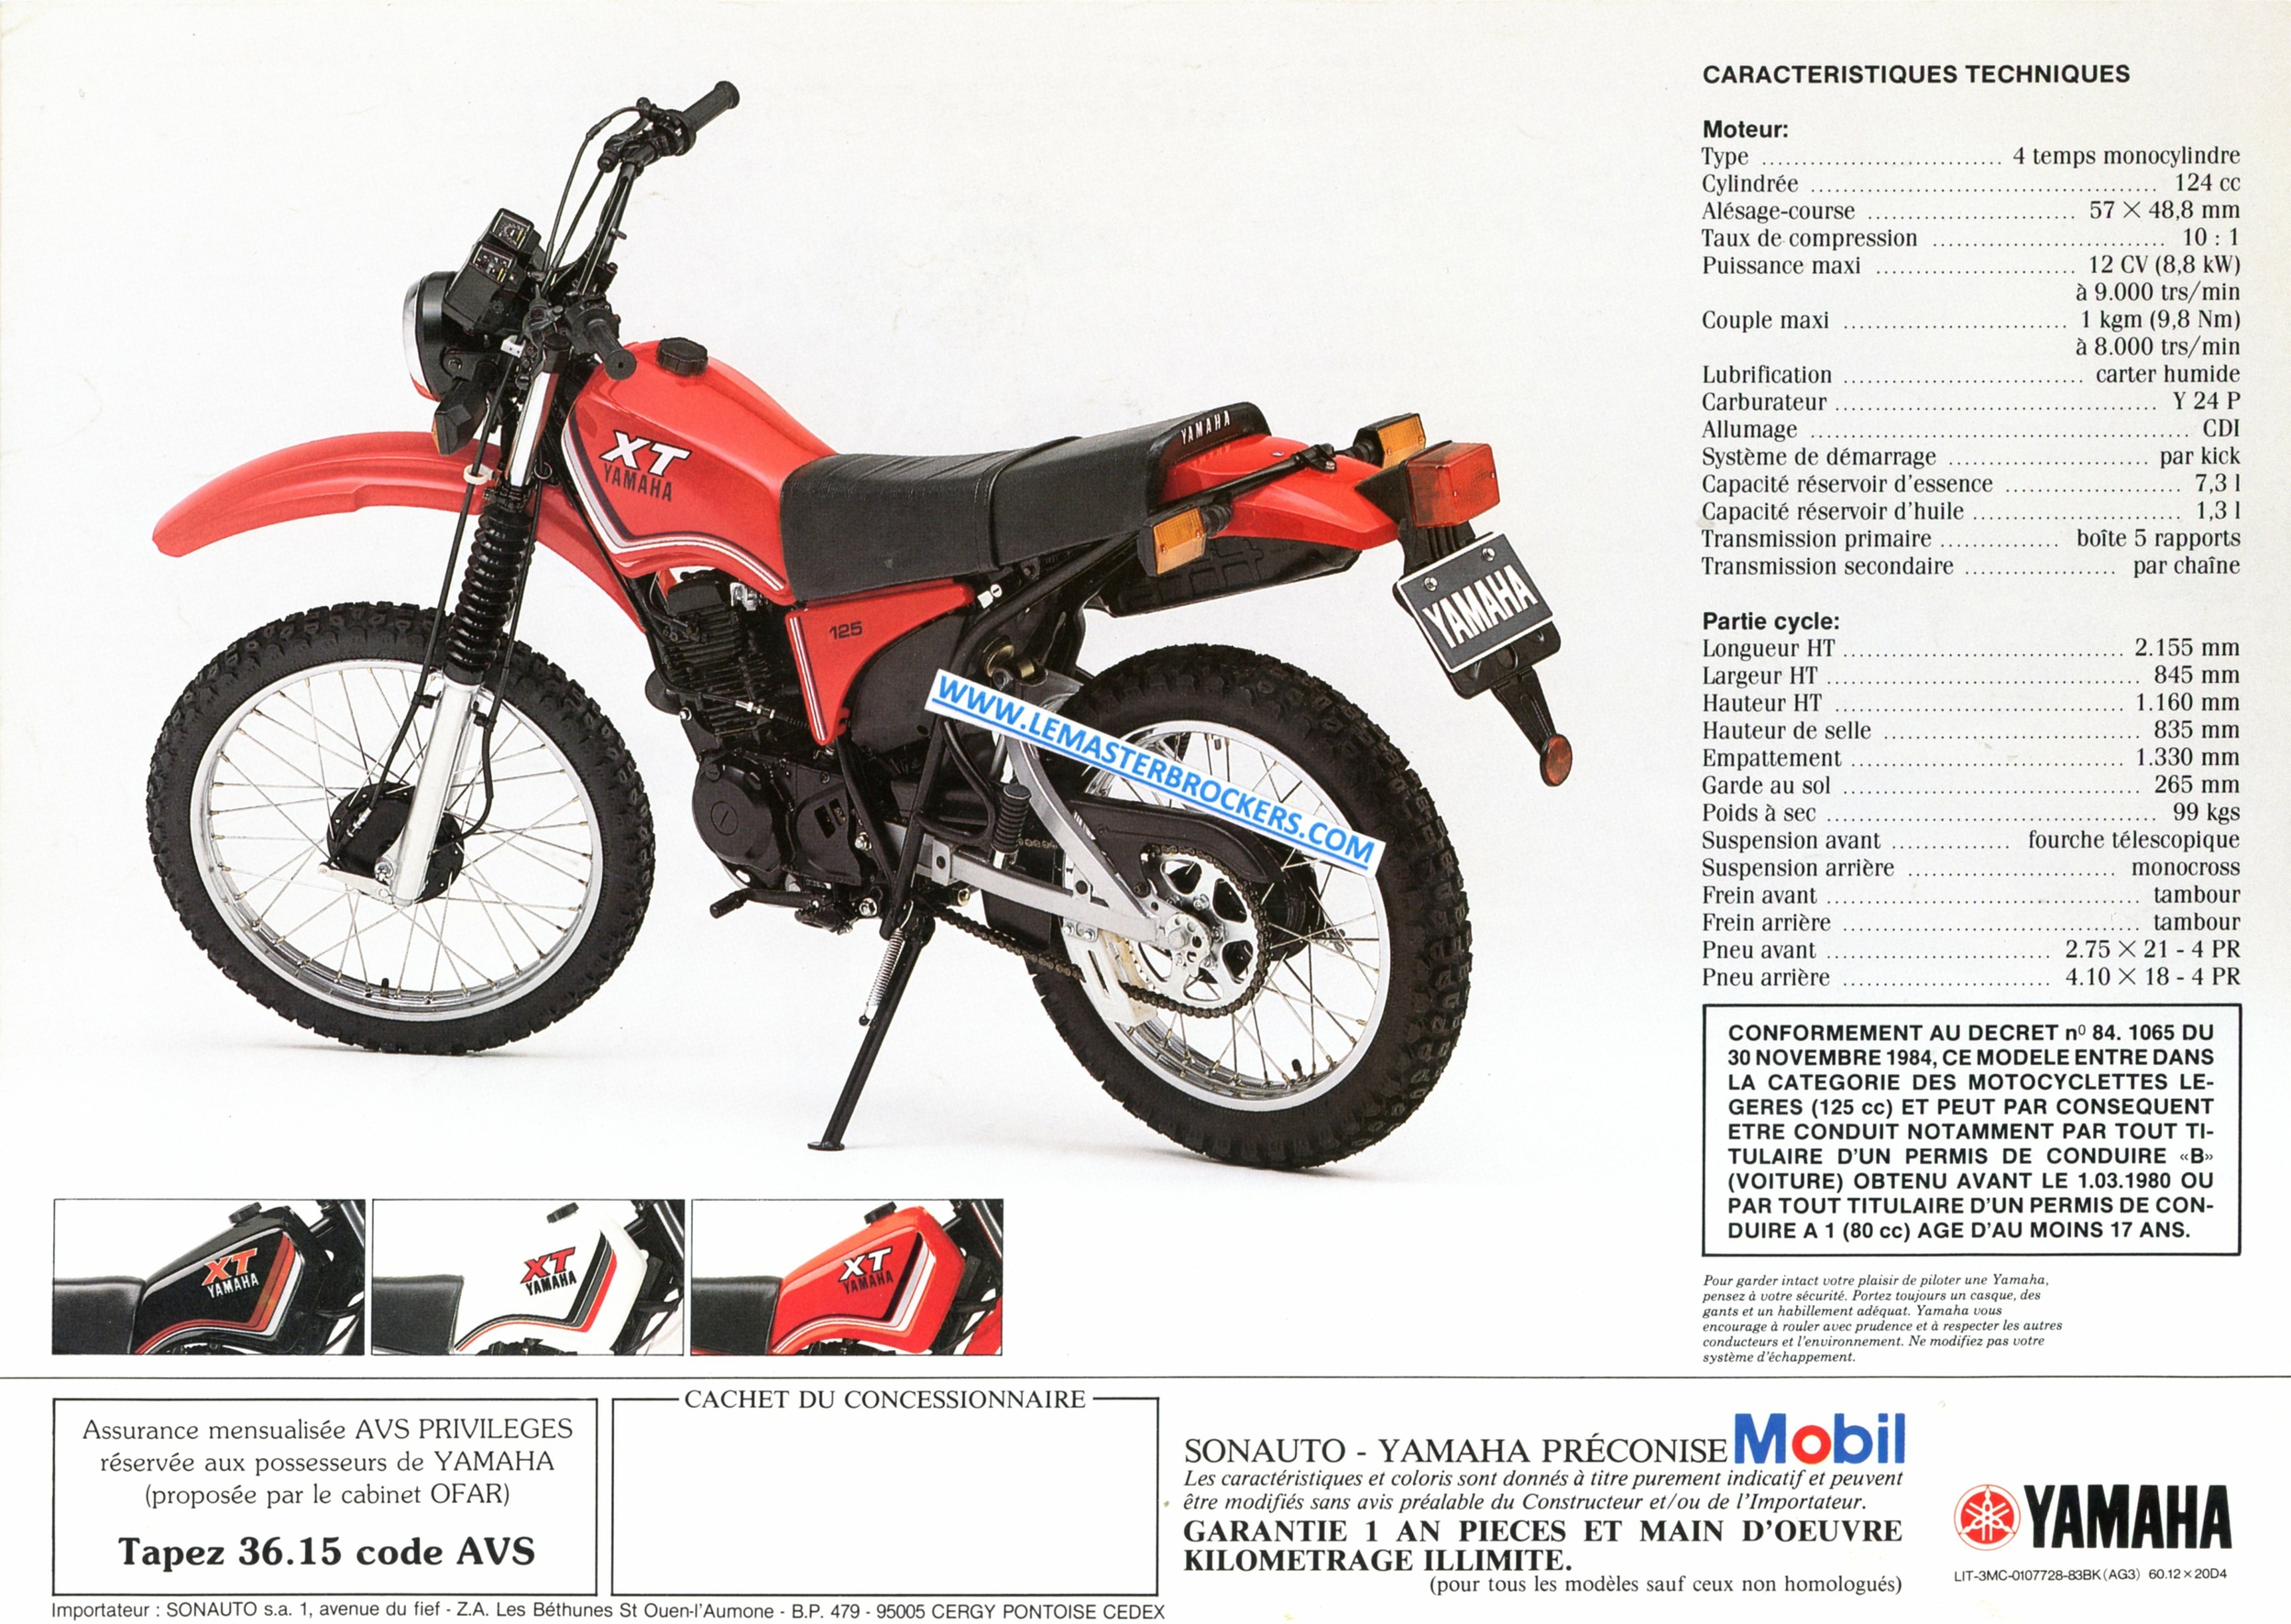 BROCHURE-MOTO-YAMAHA-XT-125-XT125-1983-LEMASTERBROCKERS